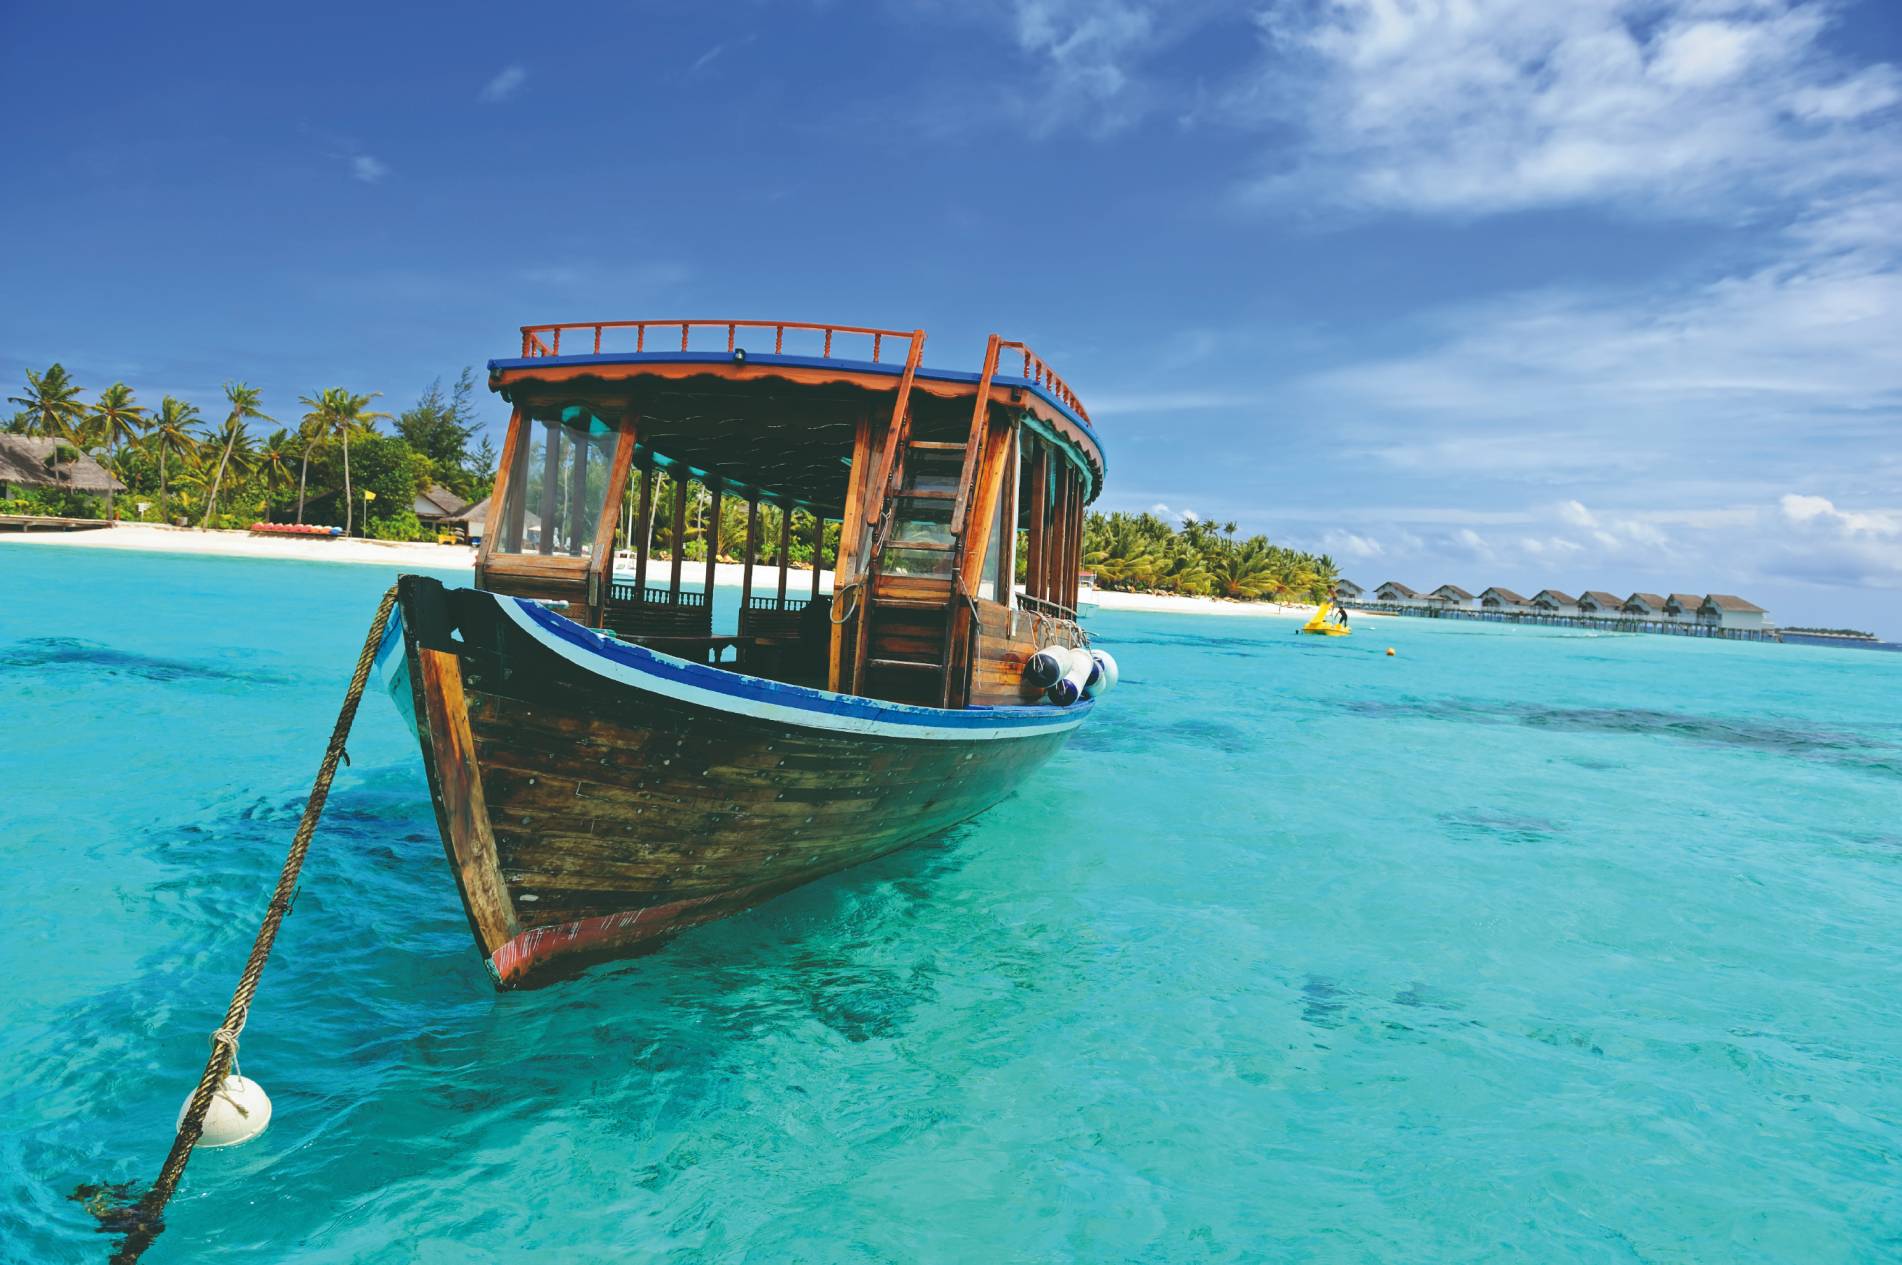 Un dhoni, bateau traditionnel des Maldives